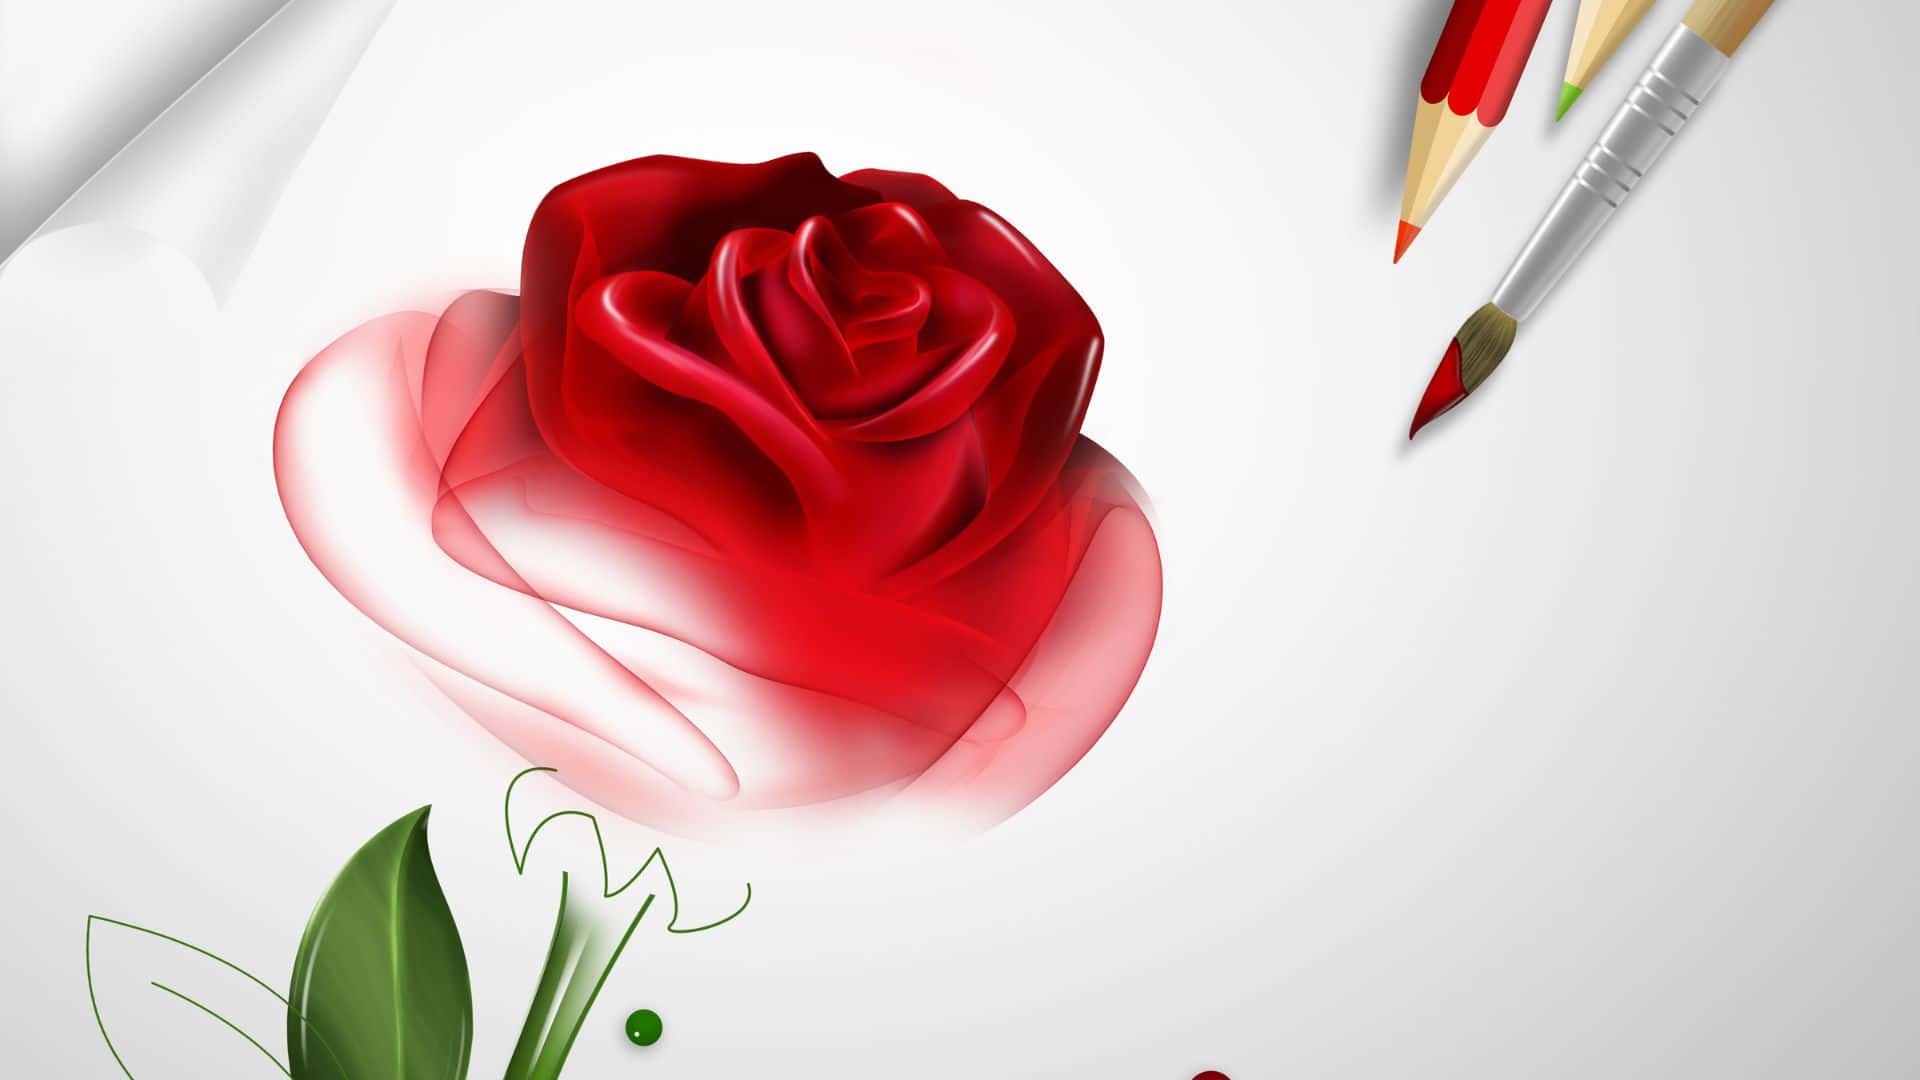 Red Rose Illustration On Progress